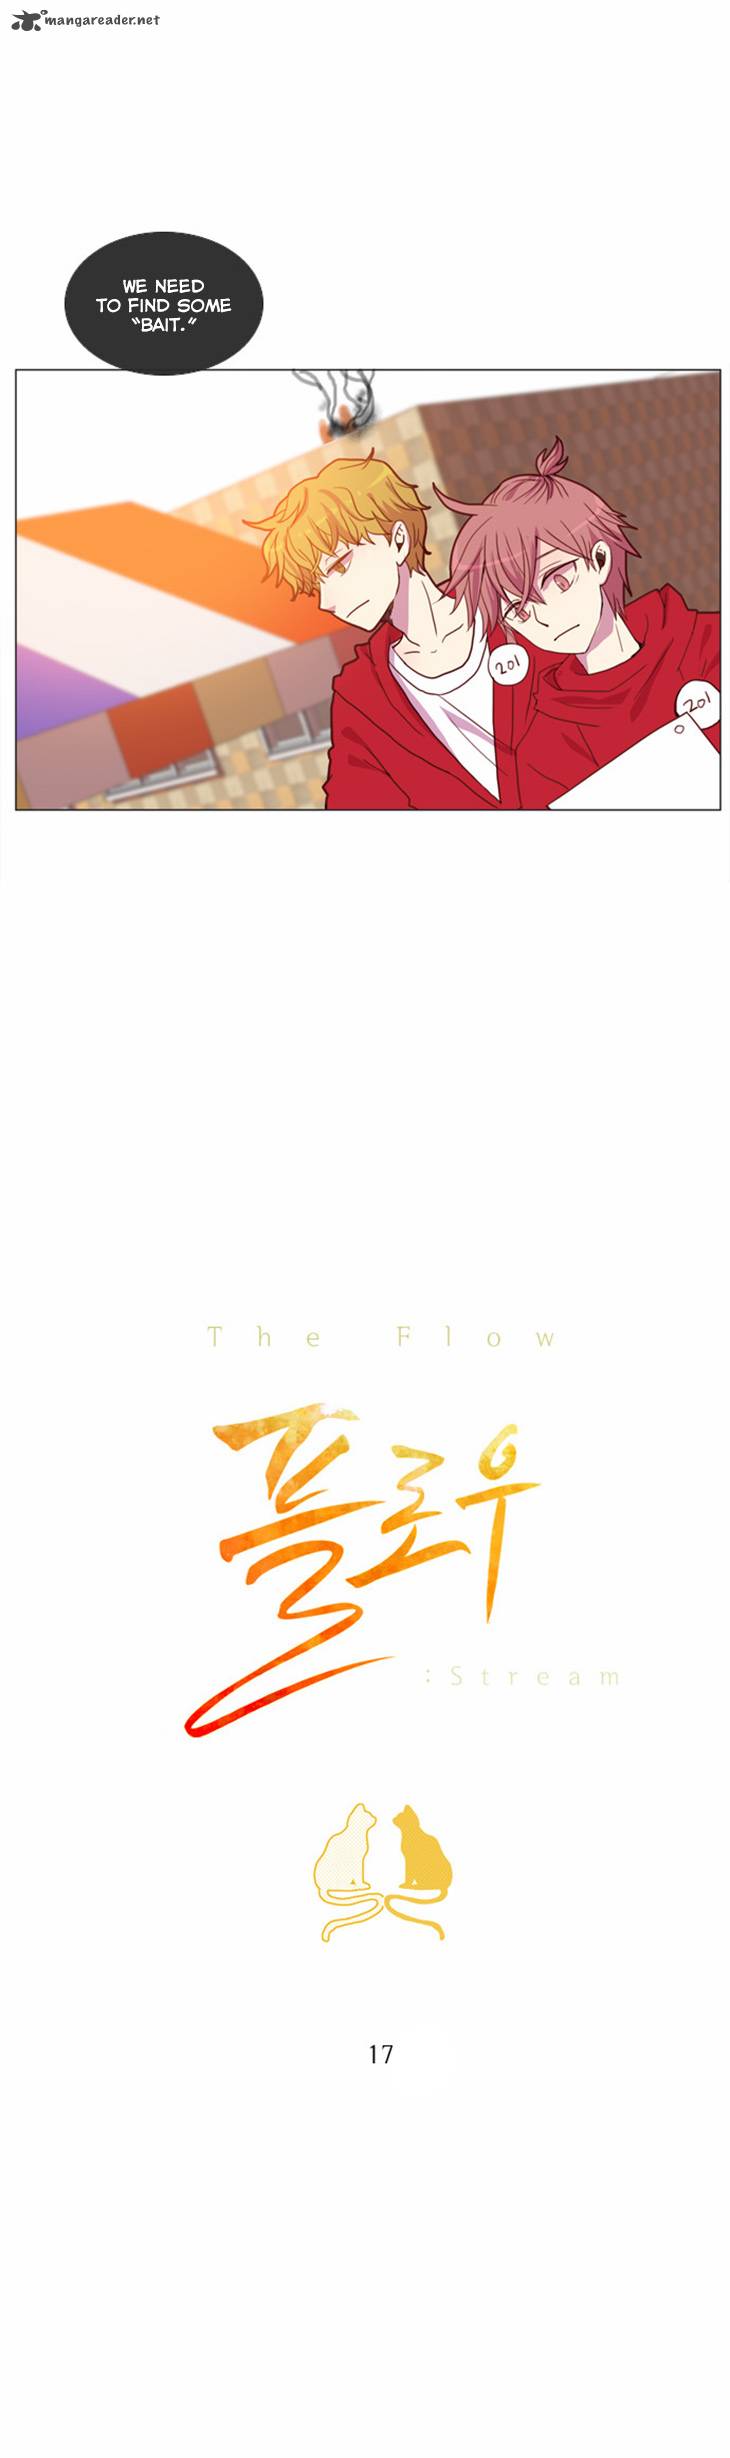 flow_17_21